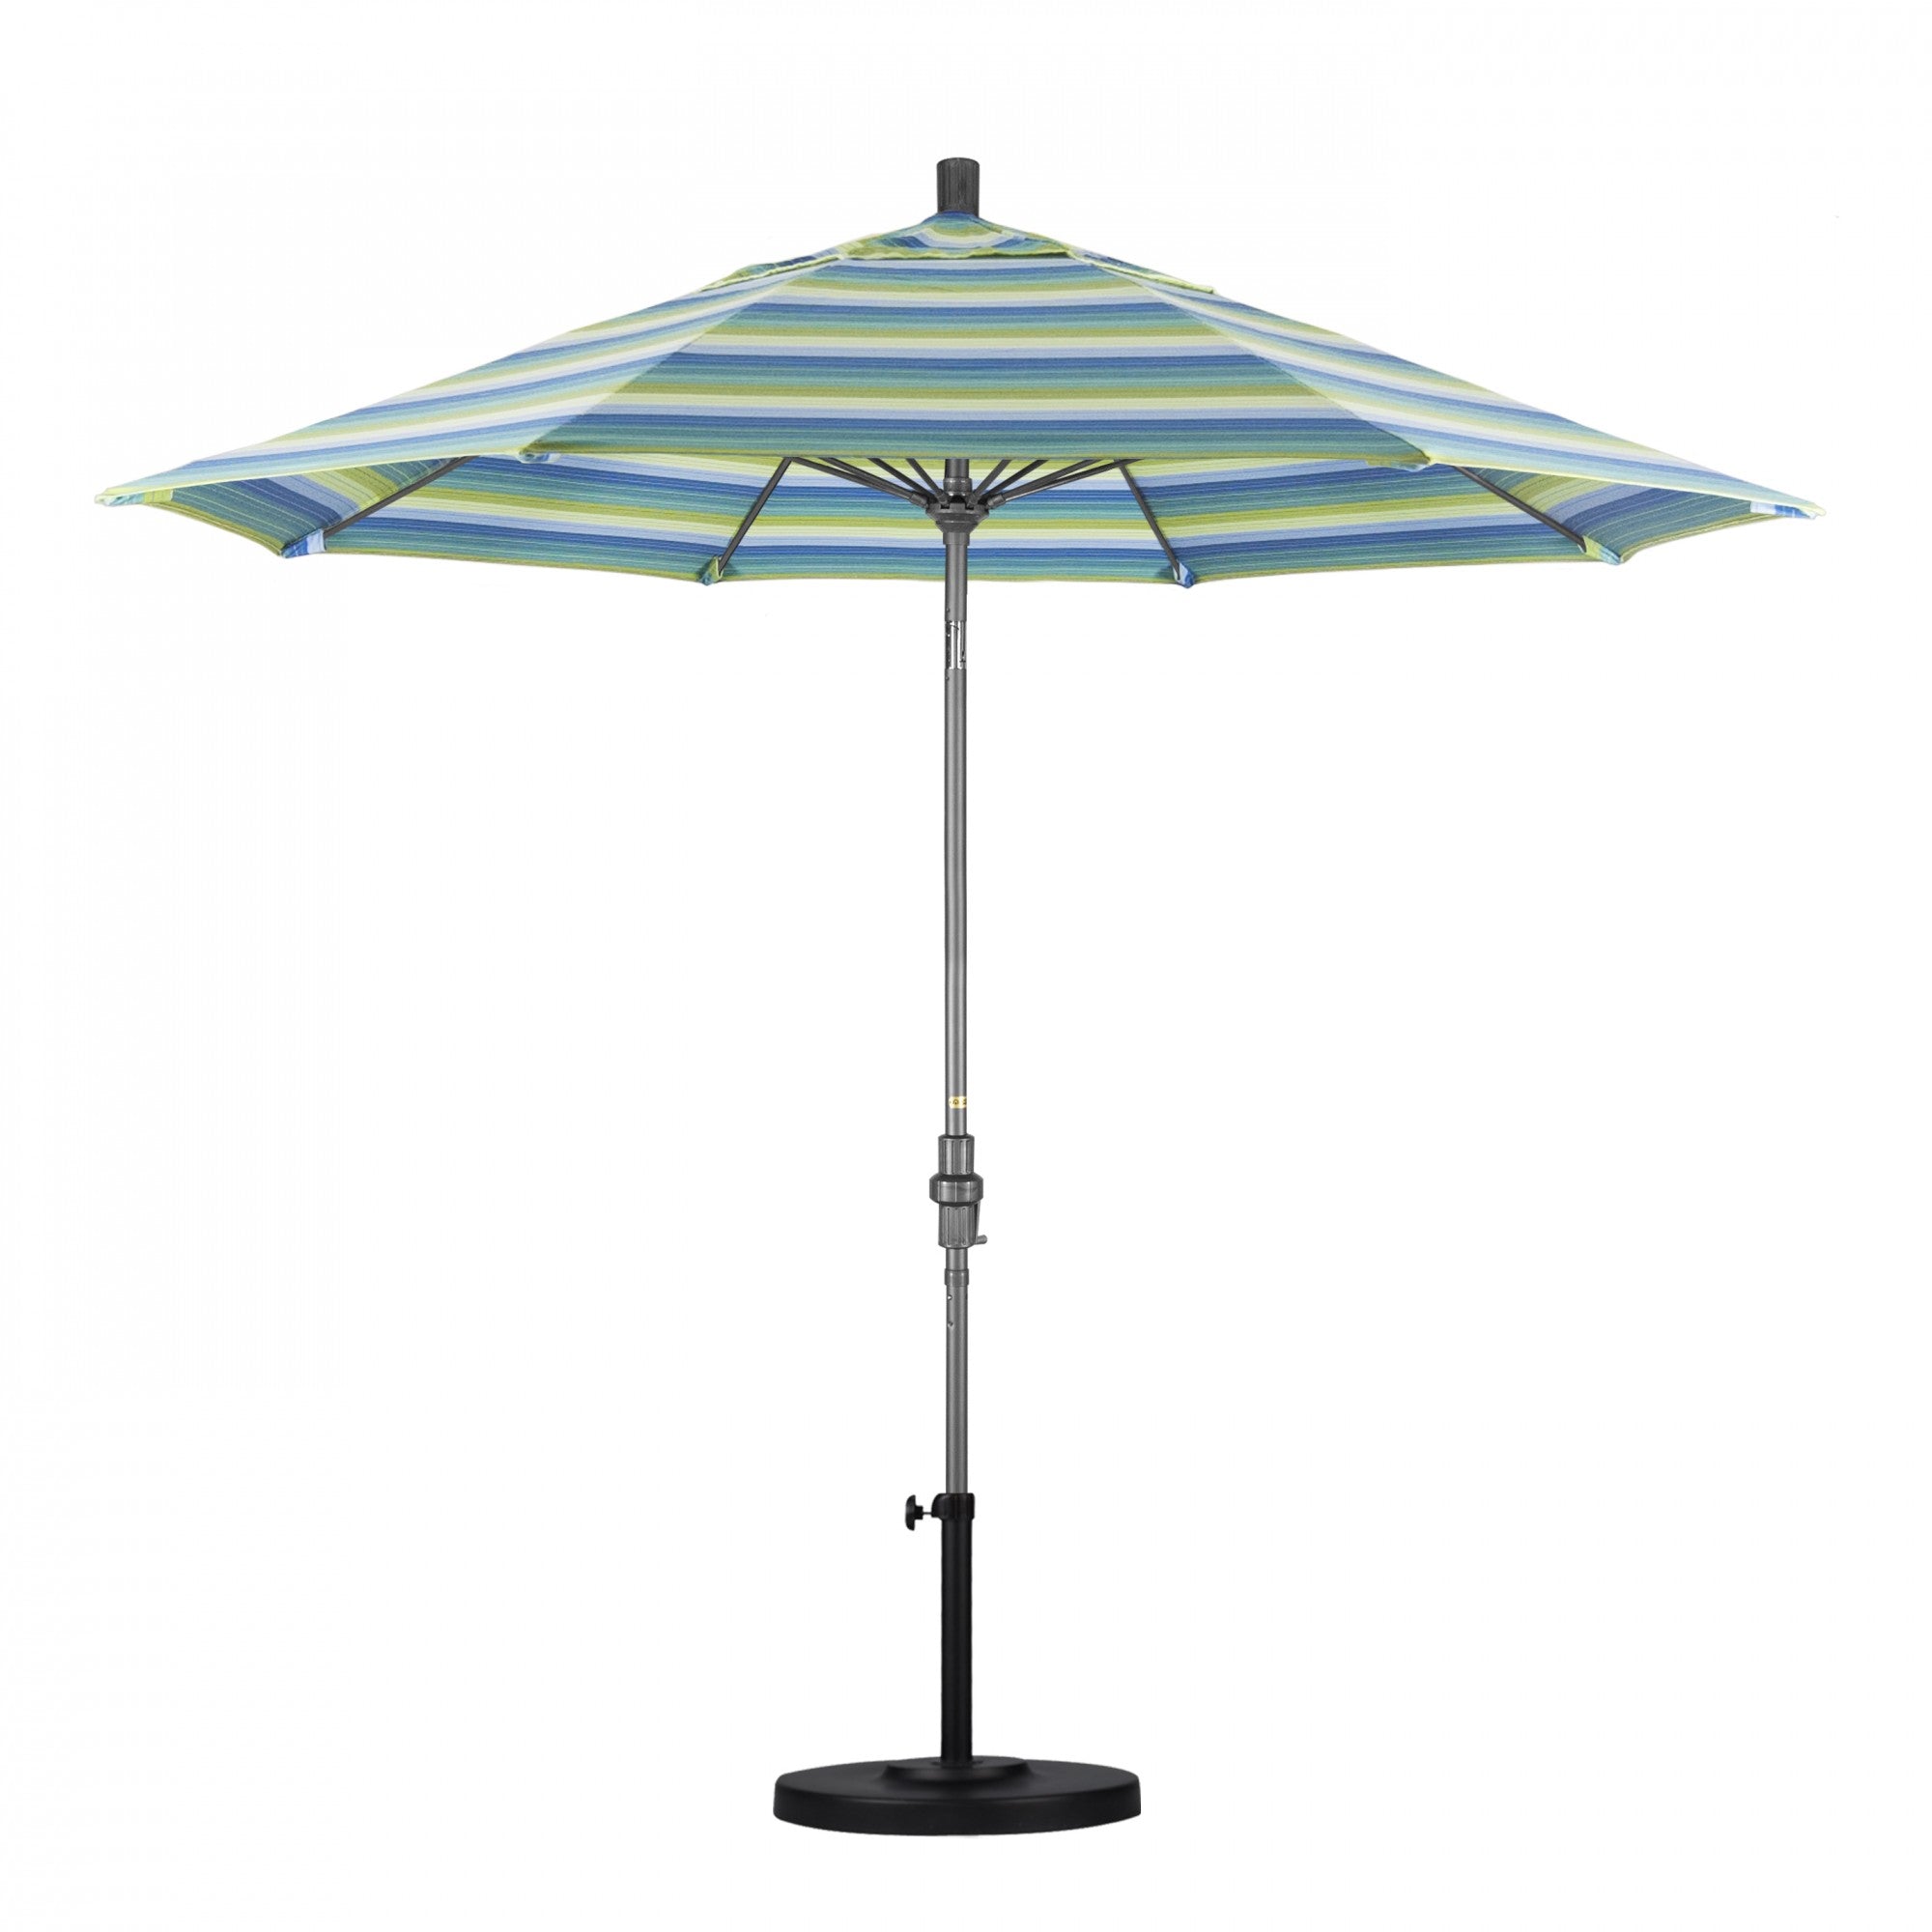 California Umbrella - 9' - Patio Umbrella Umbrella - Aluminum Pole - Seville Seaside - Sunbrella  - GSCUF908010-5608